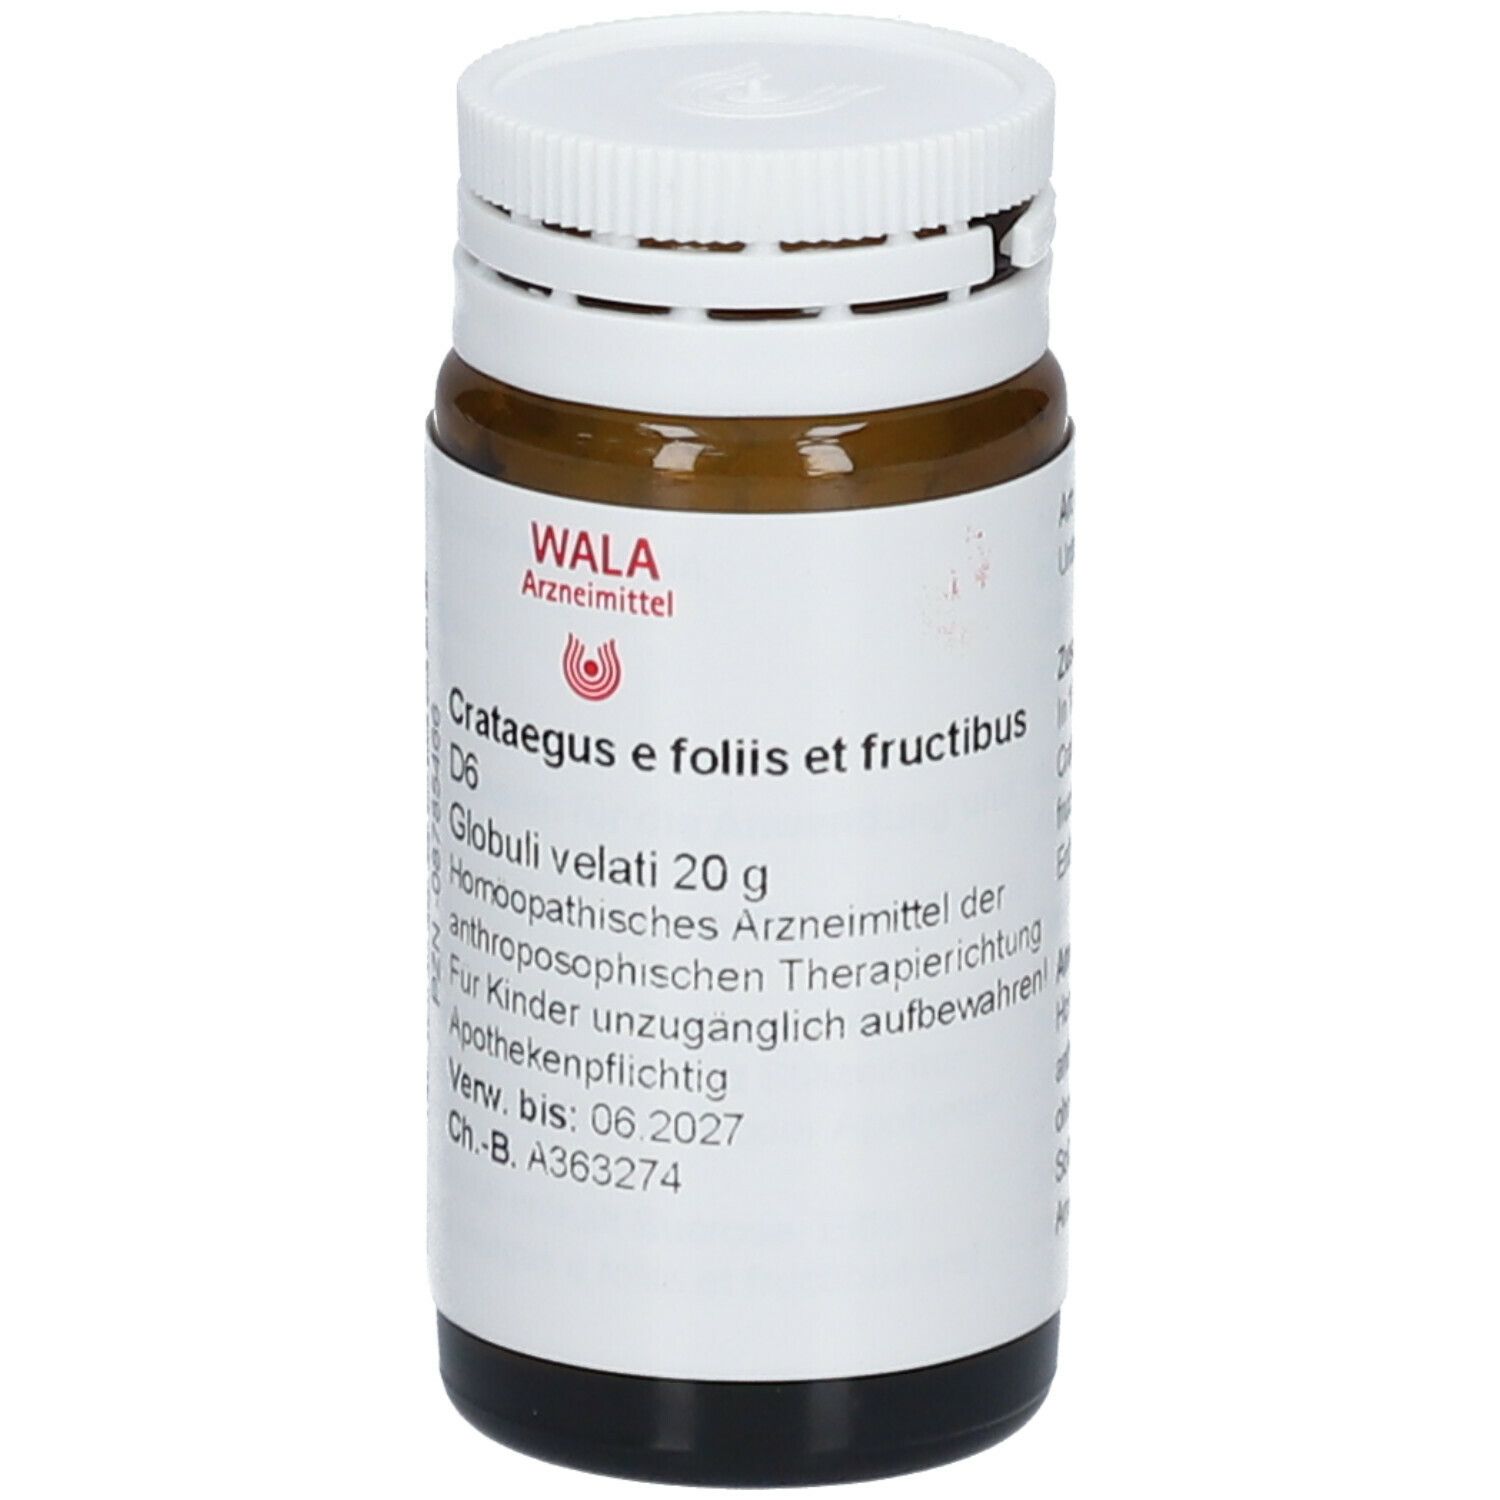 WALA® Crataegus e foliis et fructibus D 6